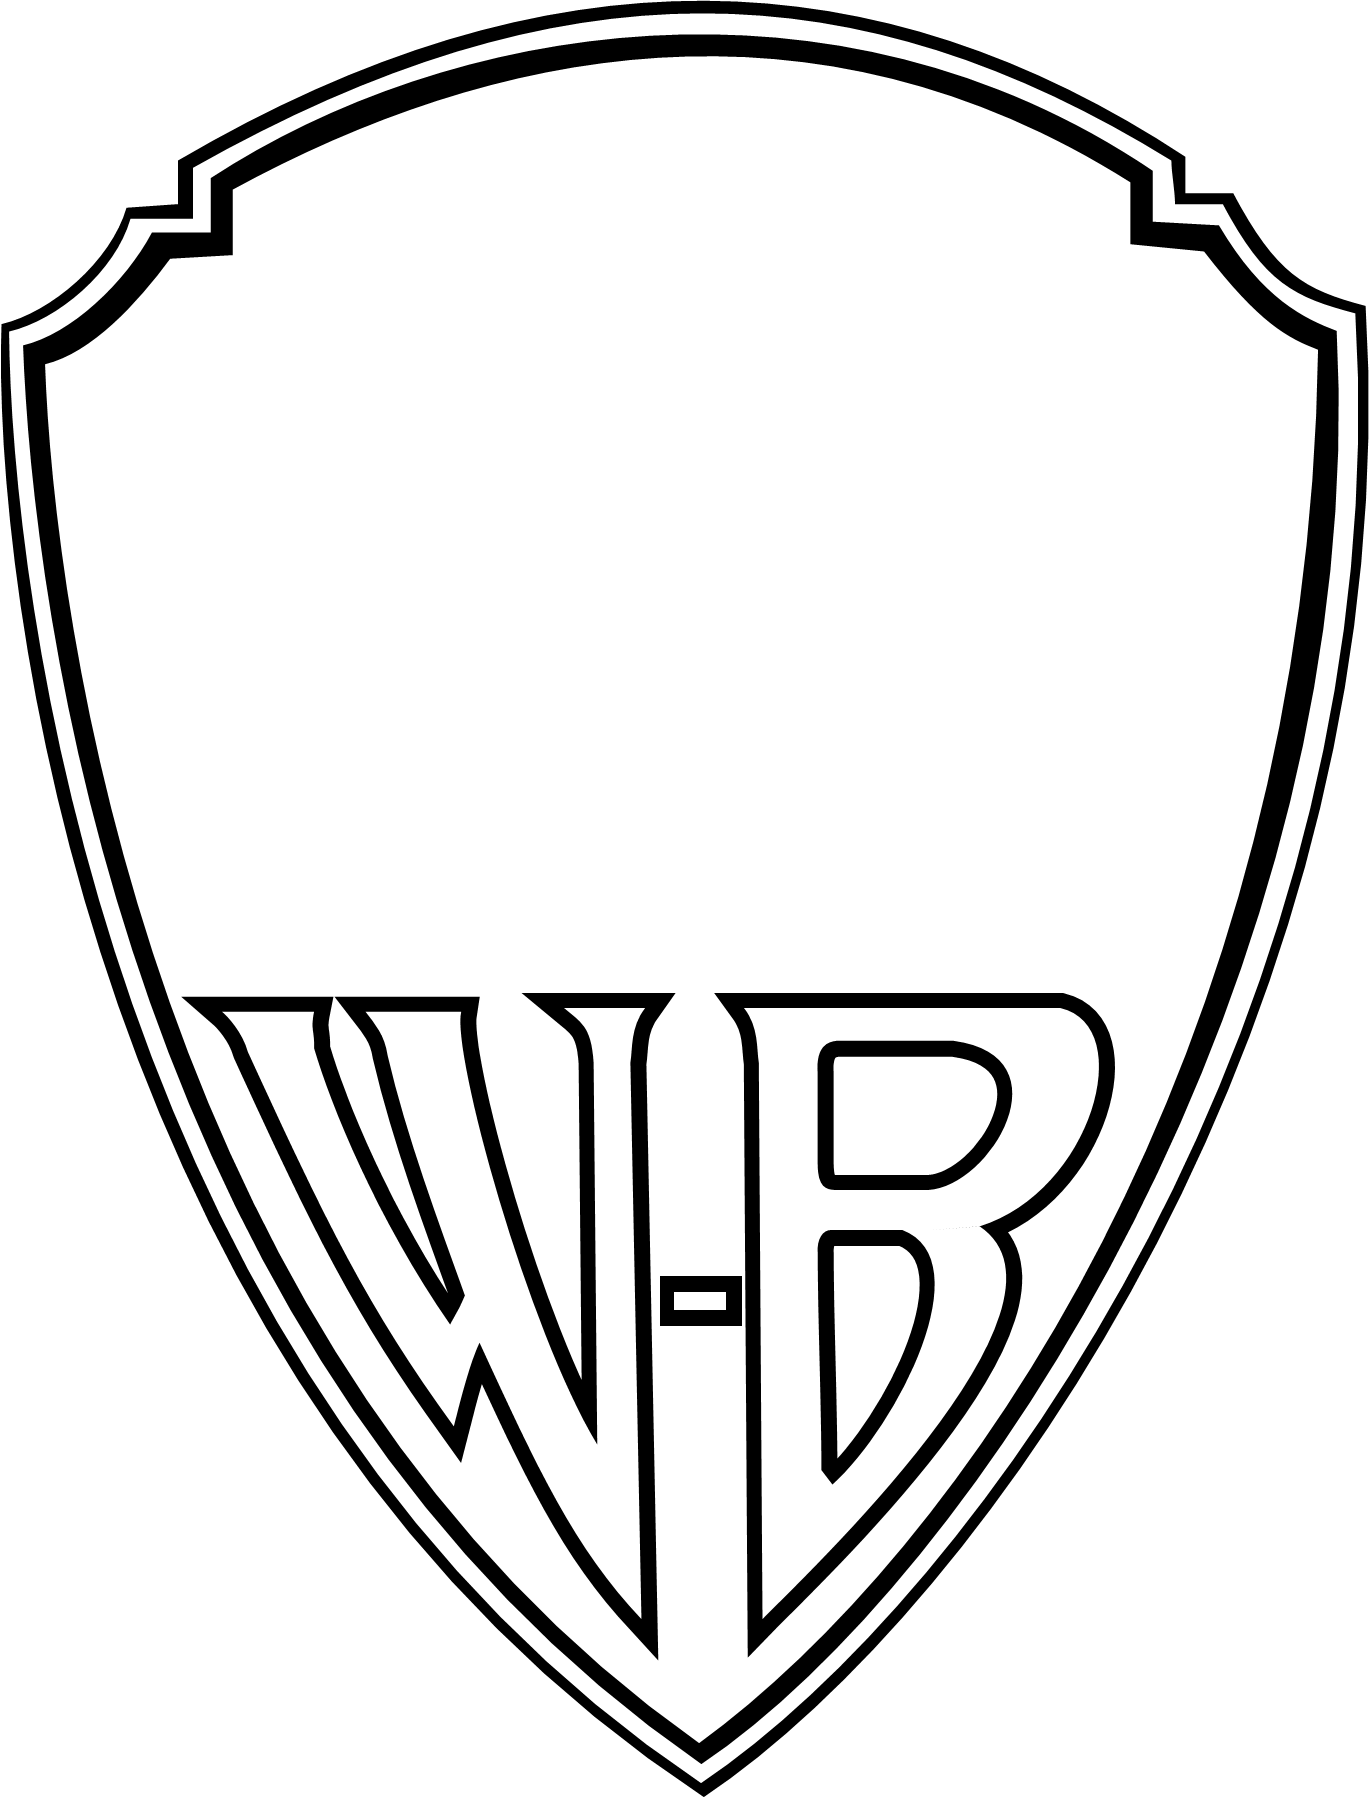 WarnerBros Shield Logo - Image - Warner Bros. 1923.png | Logo Timeline Wiki | FANDOM powered ...